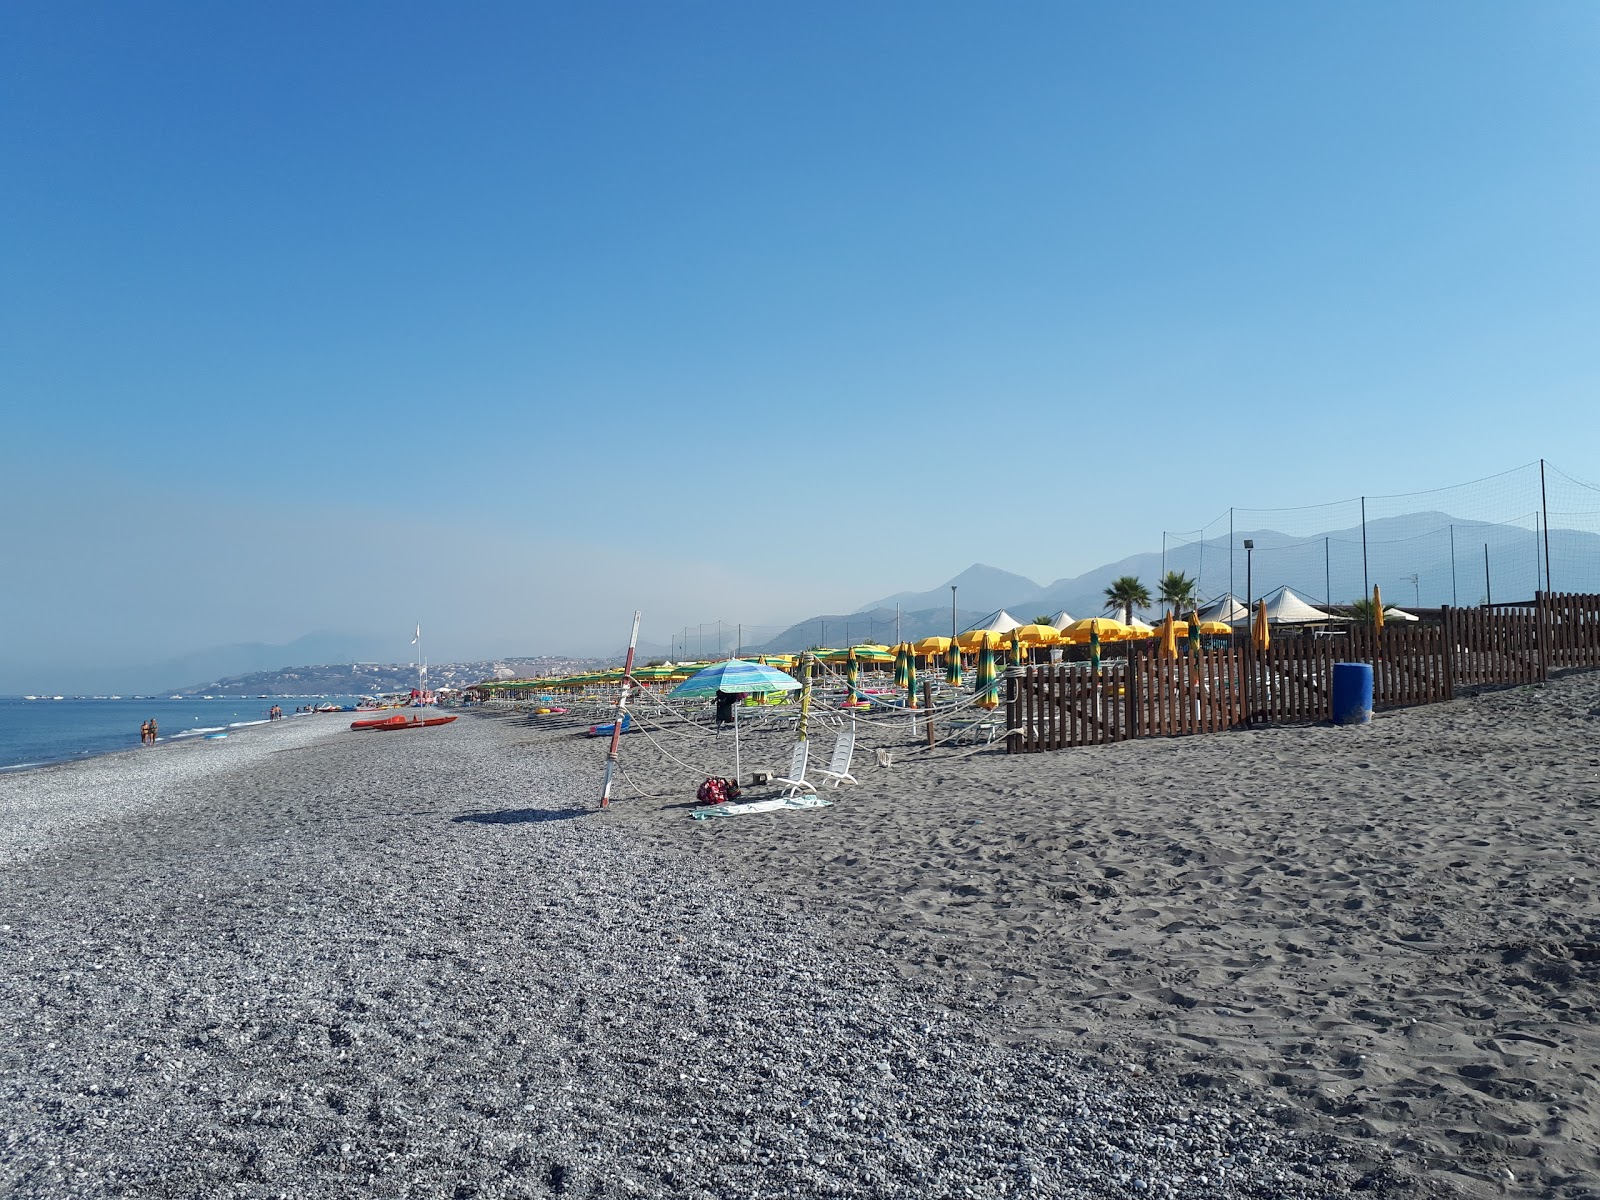 Foto av Spiaggia di Scalea II med grå sand yta